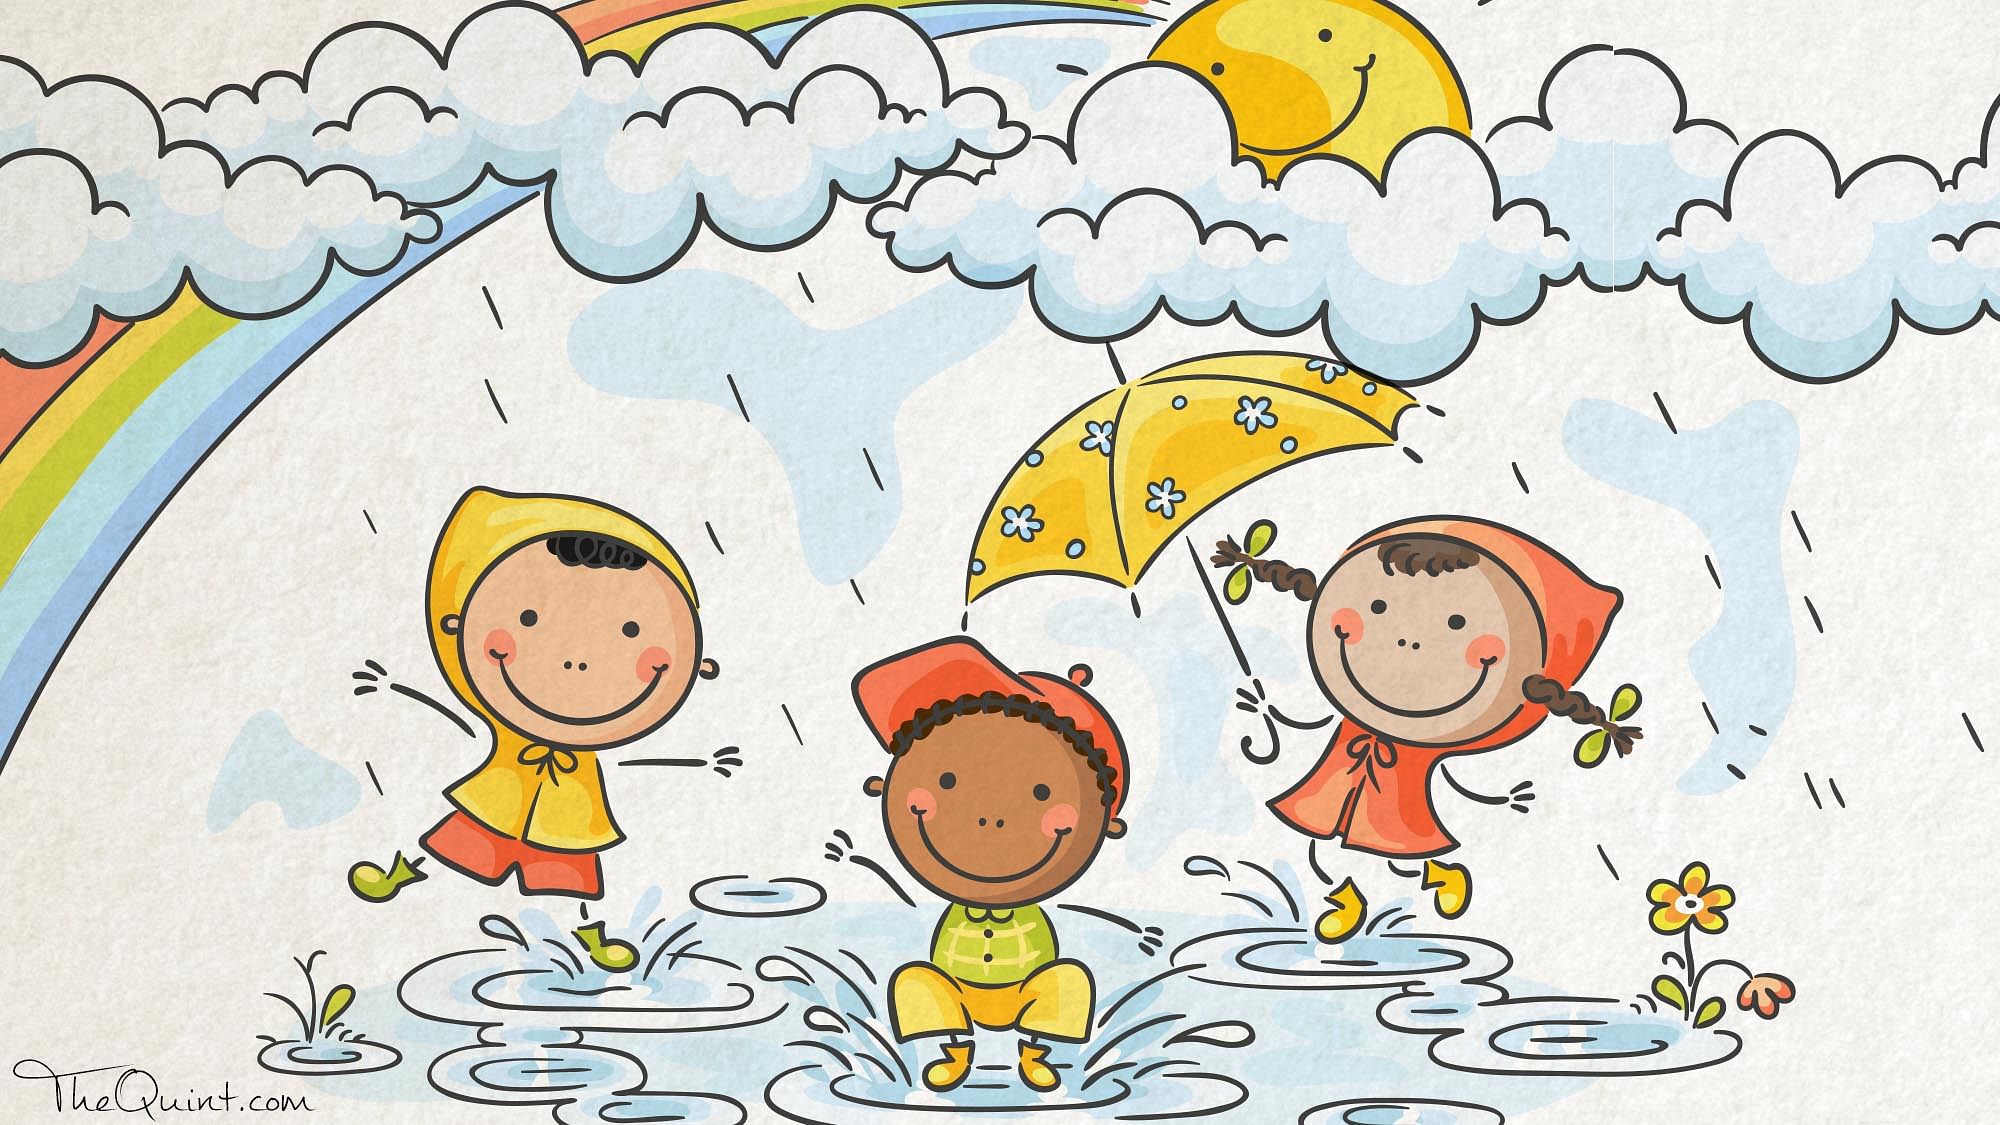 Kids illustrate the weather from season to season - The Washington Post